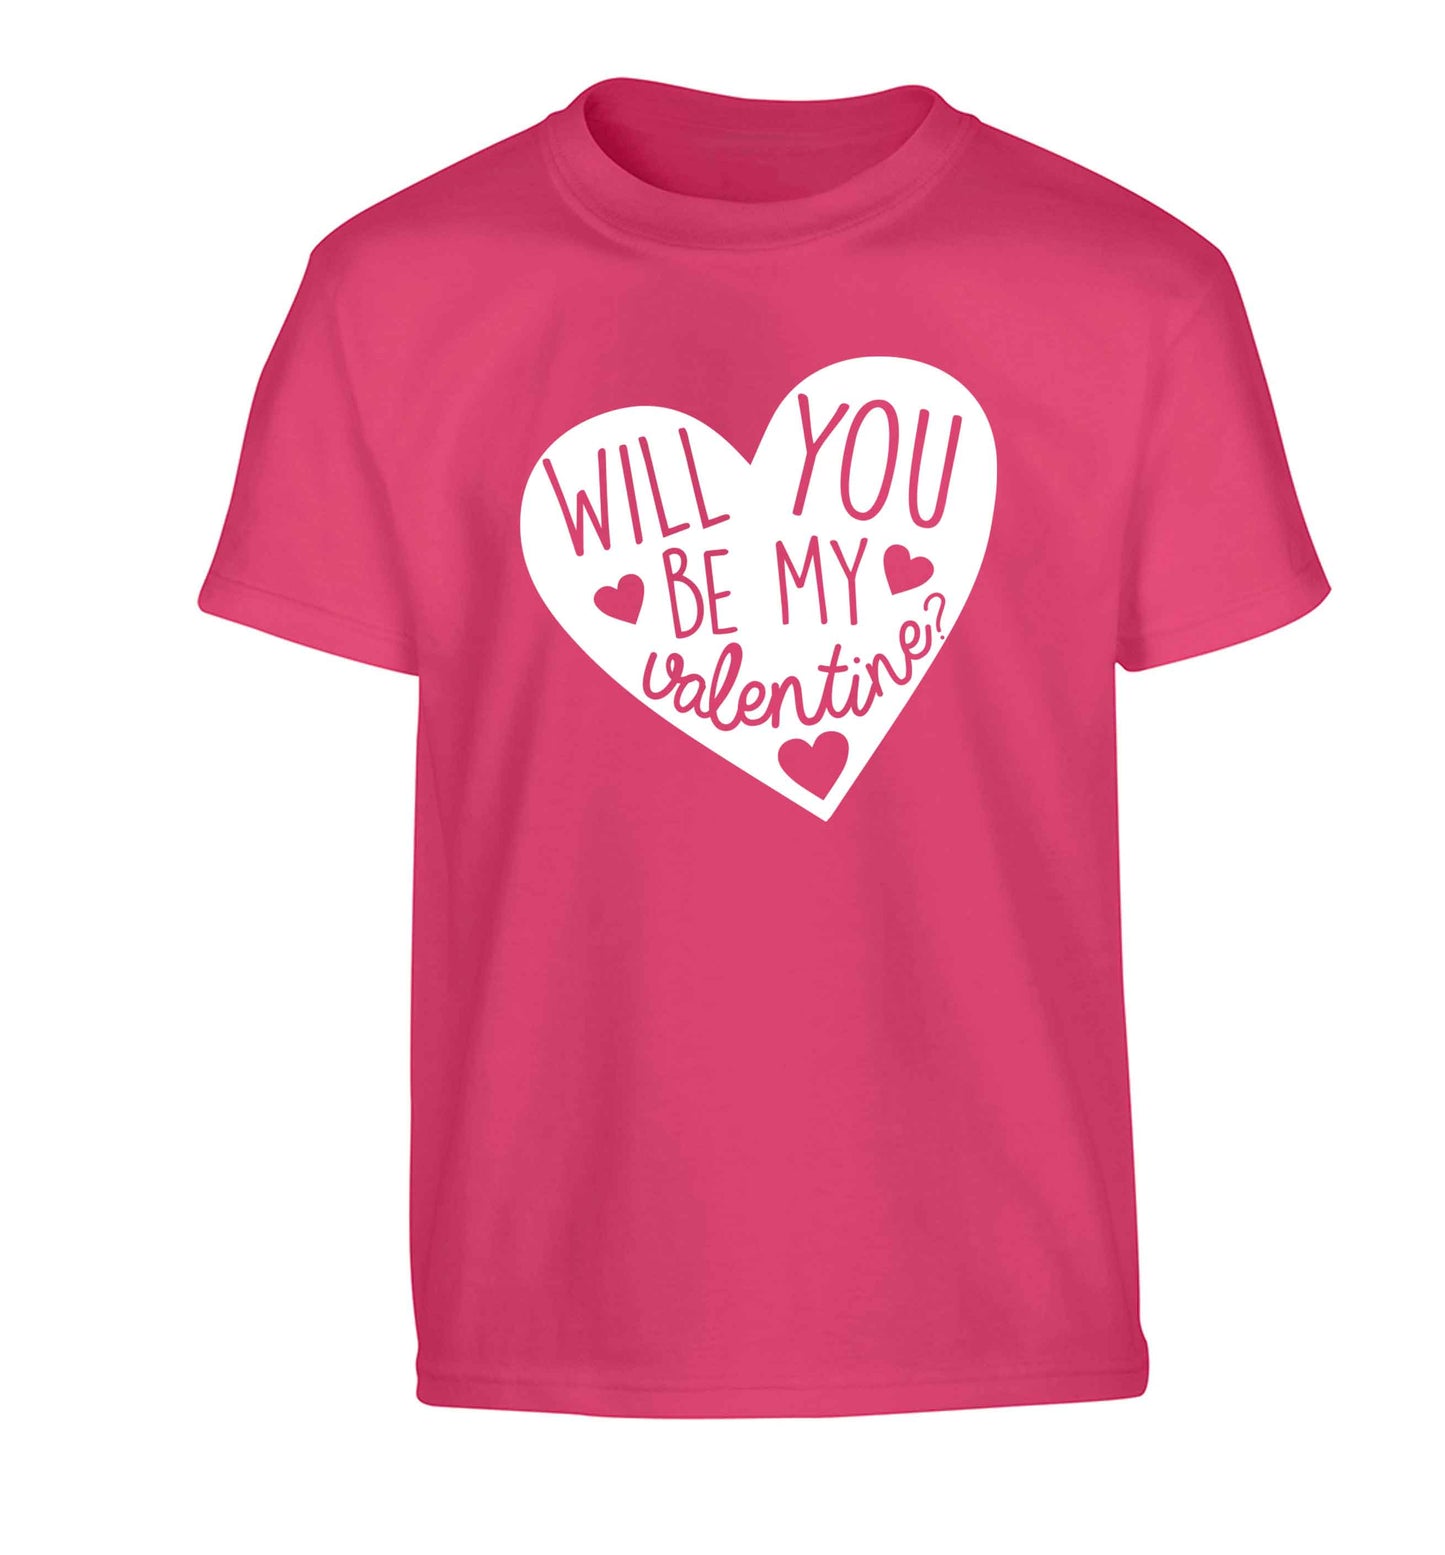 Will you be my valentine? Children's pink Tshirt 12-13 Years